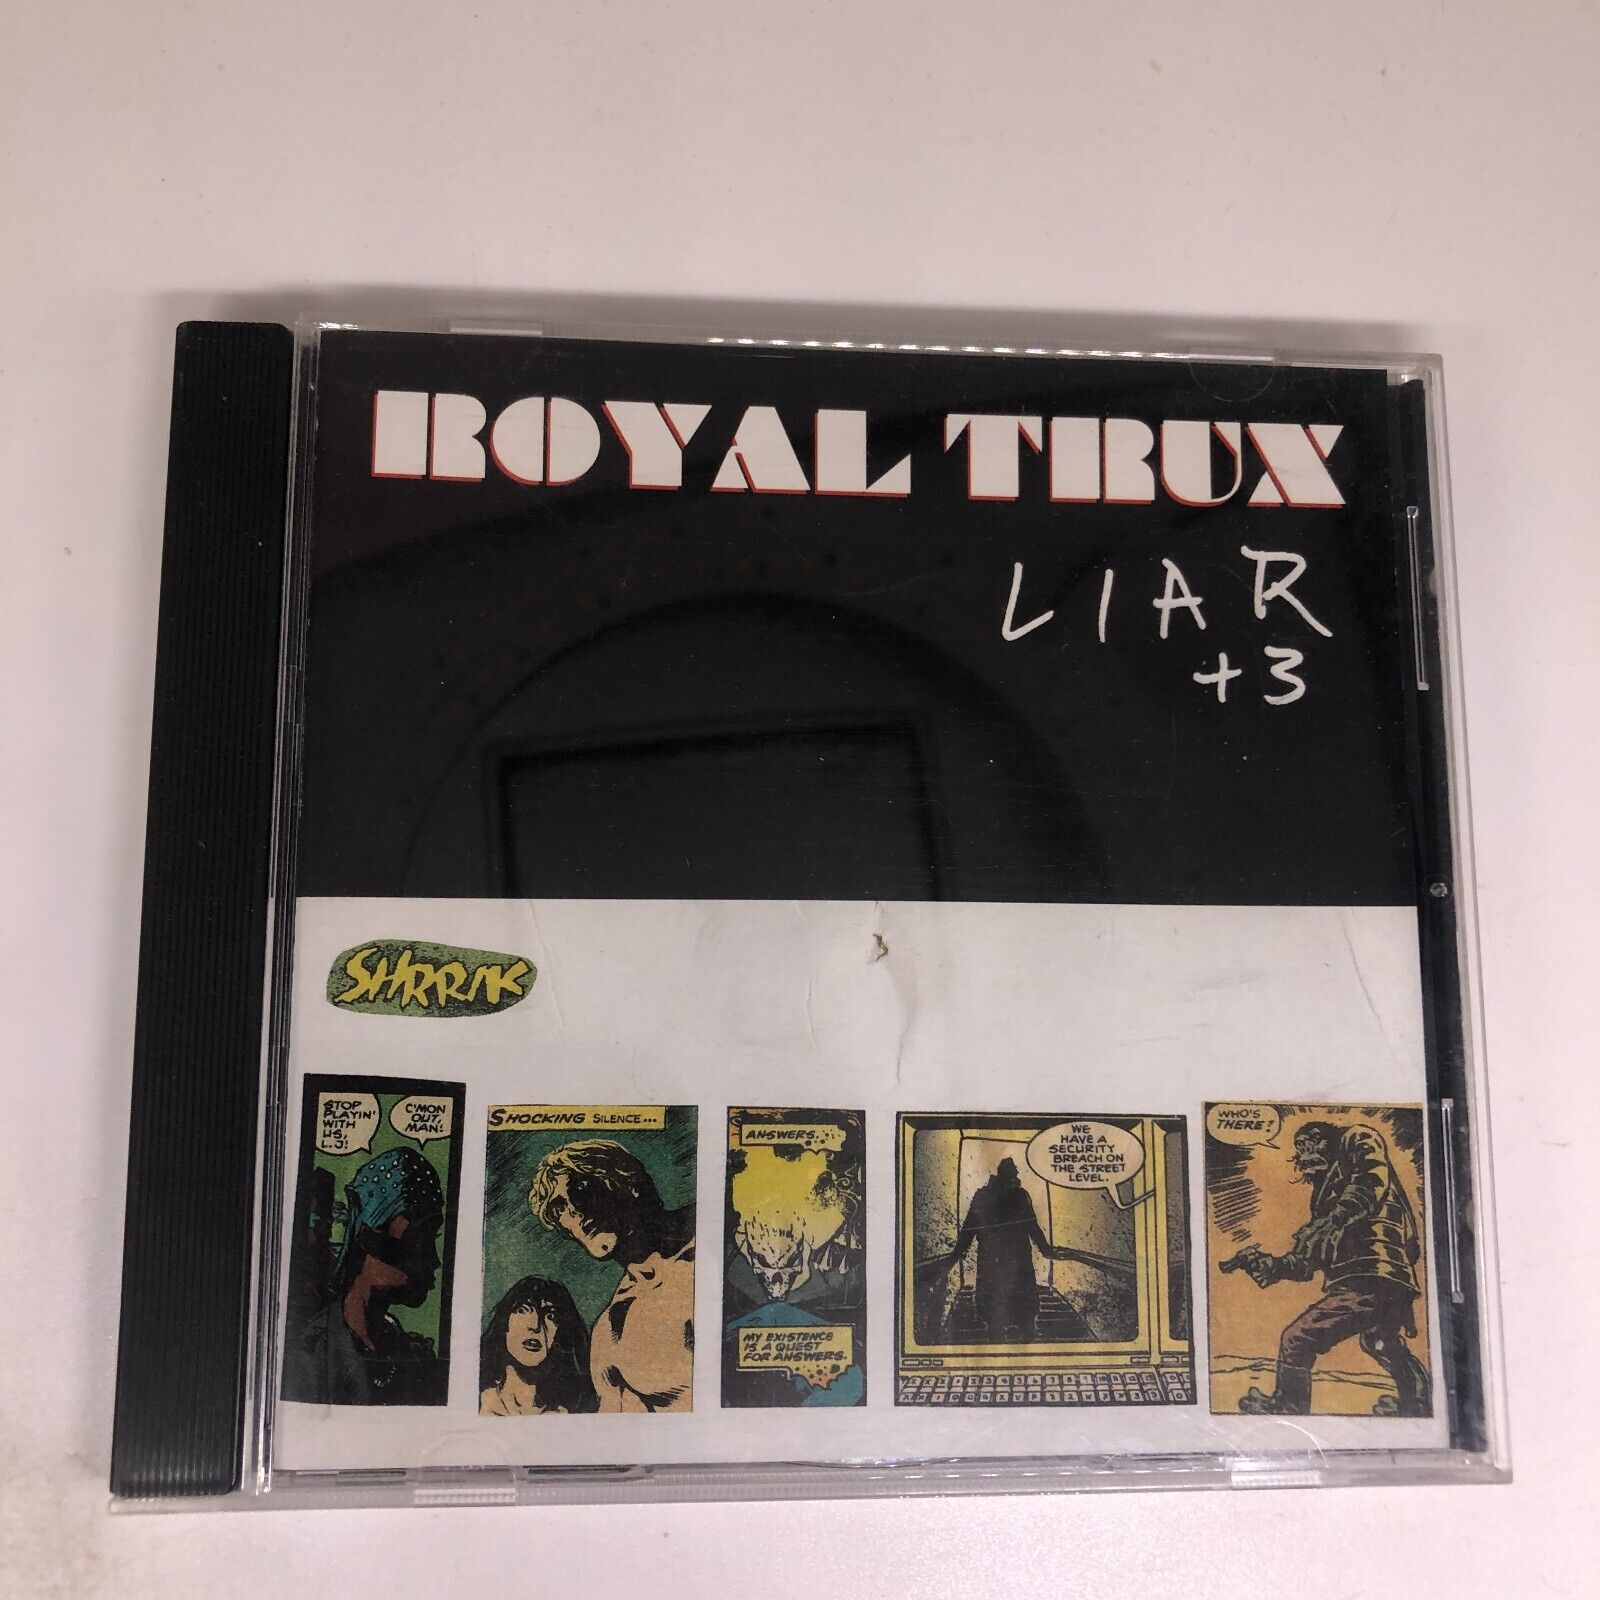 Royal Trux - Liar - CD